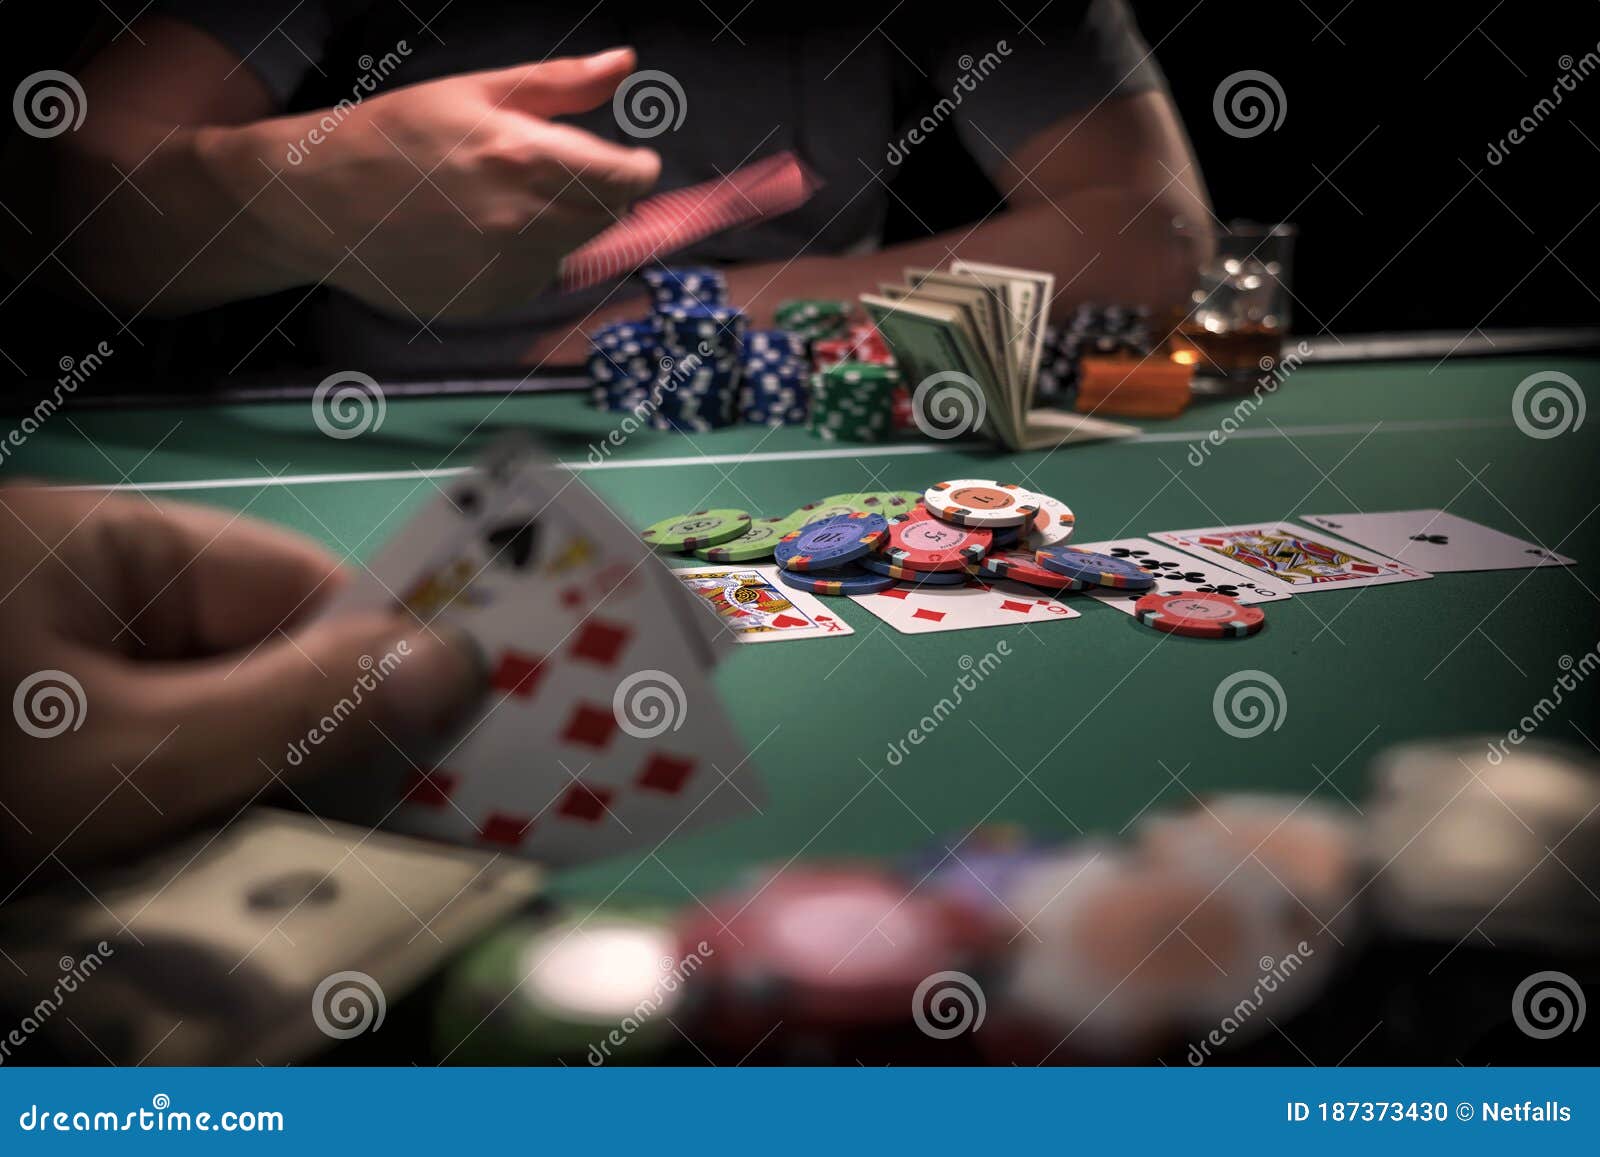 high-stakes-poker-game-casino-187373430.jpg